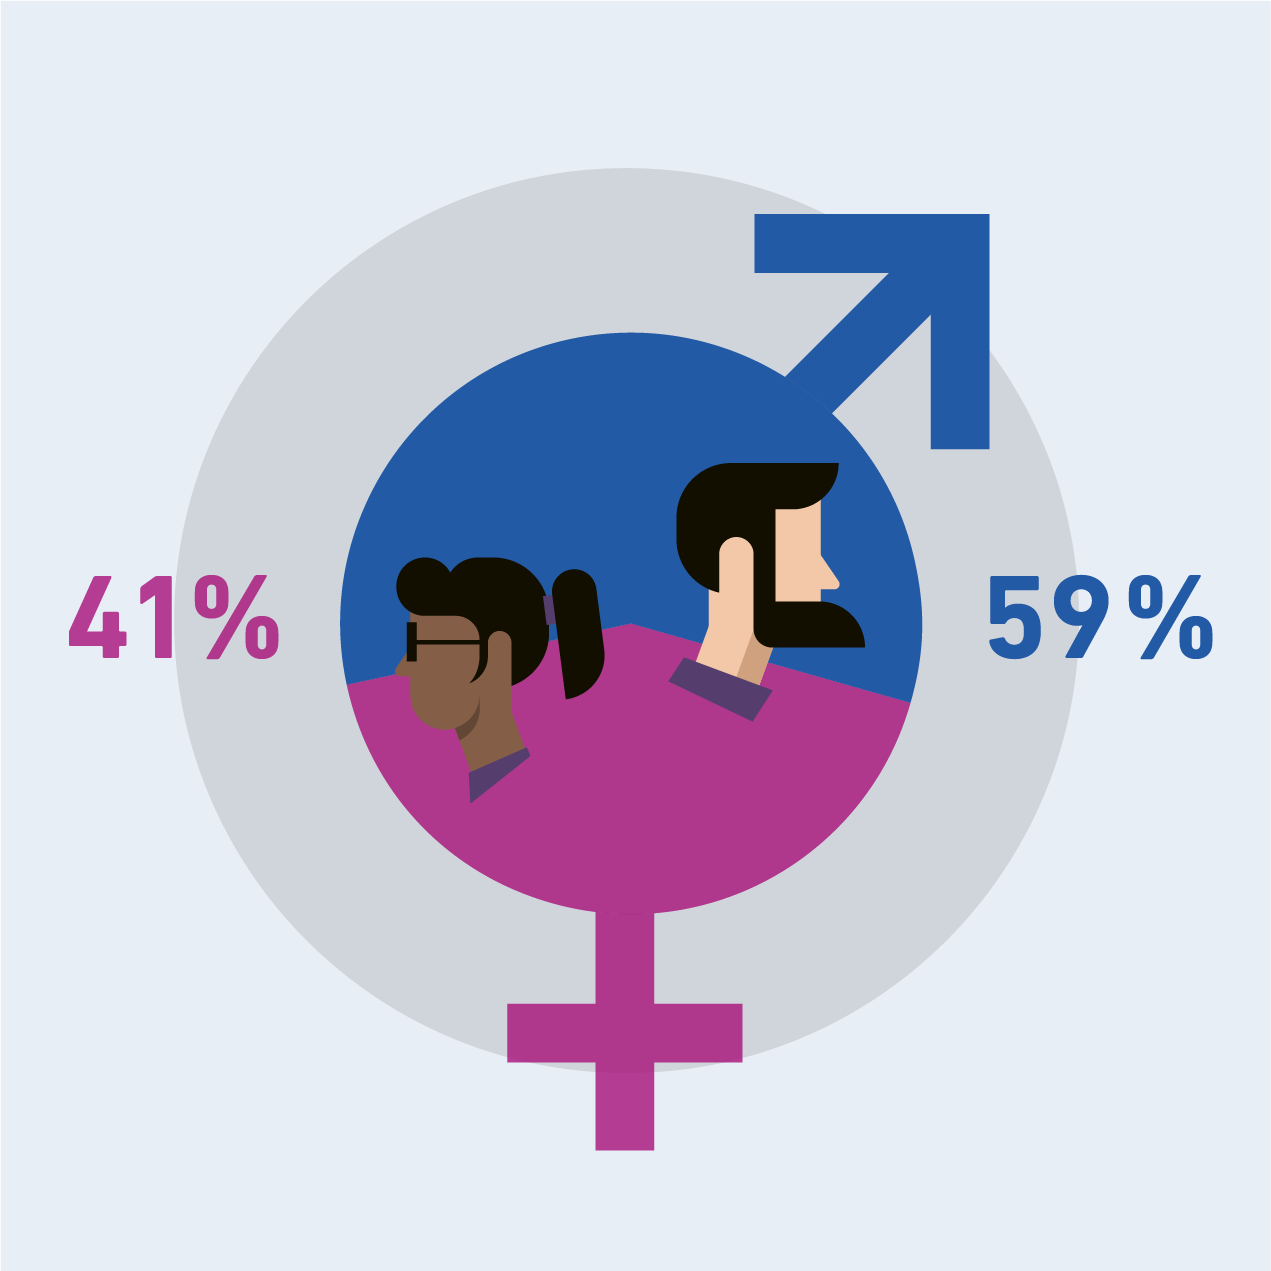 Gender distribution ETH continuing education HS23 (41% women, 59% men)